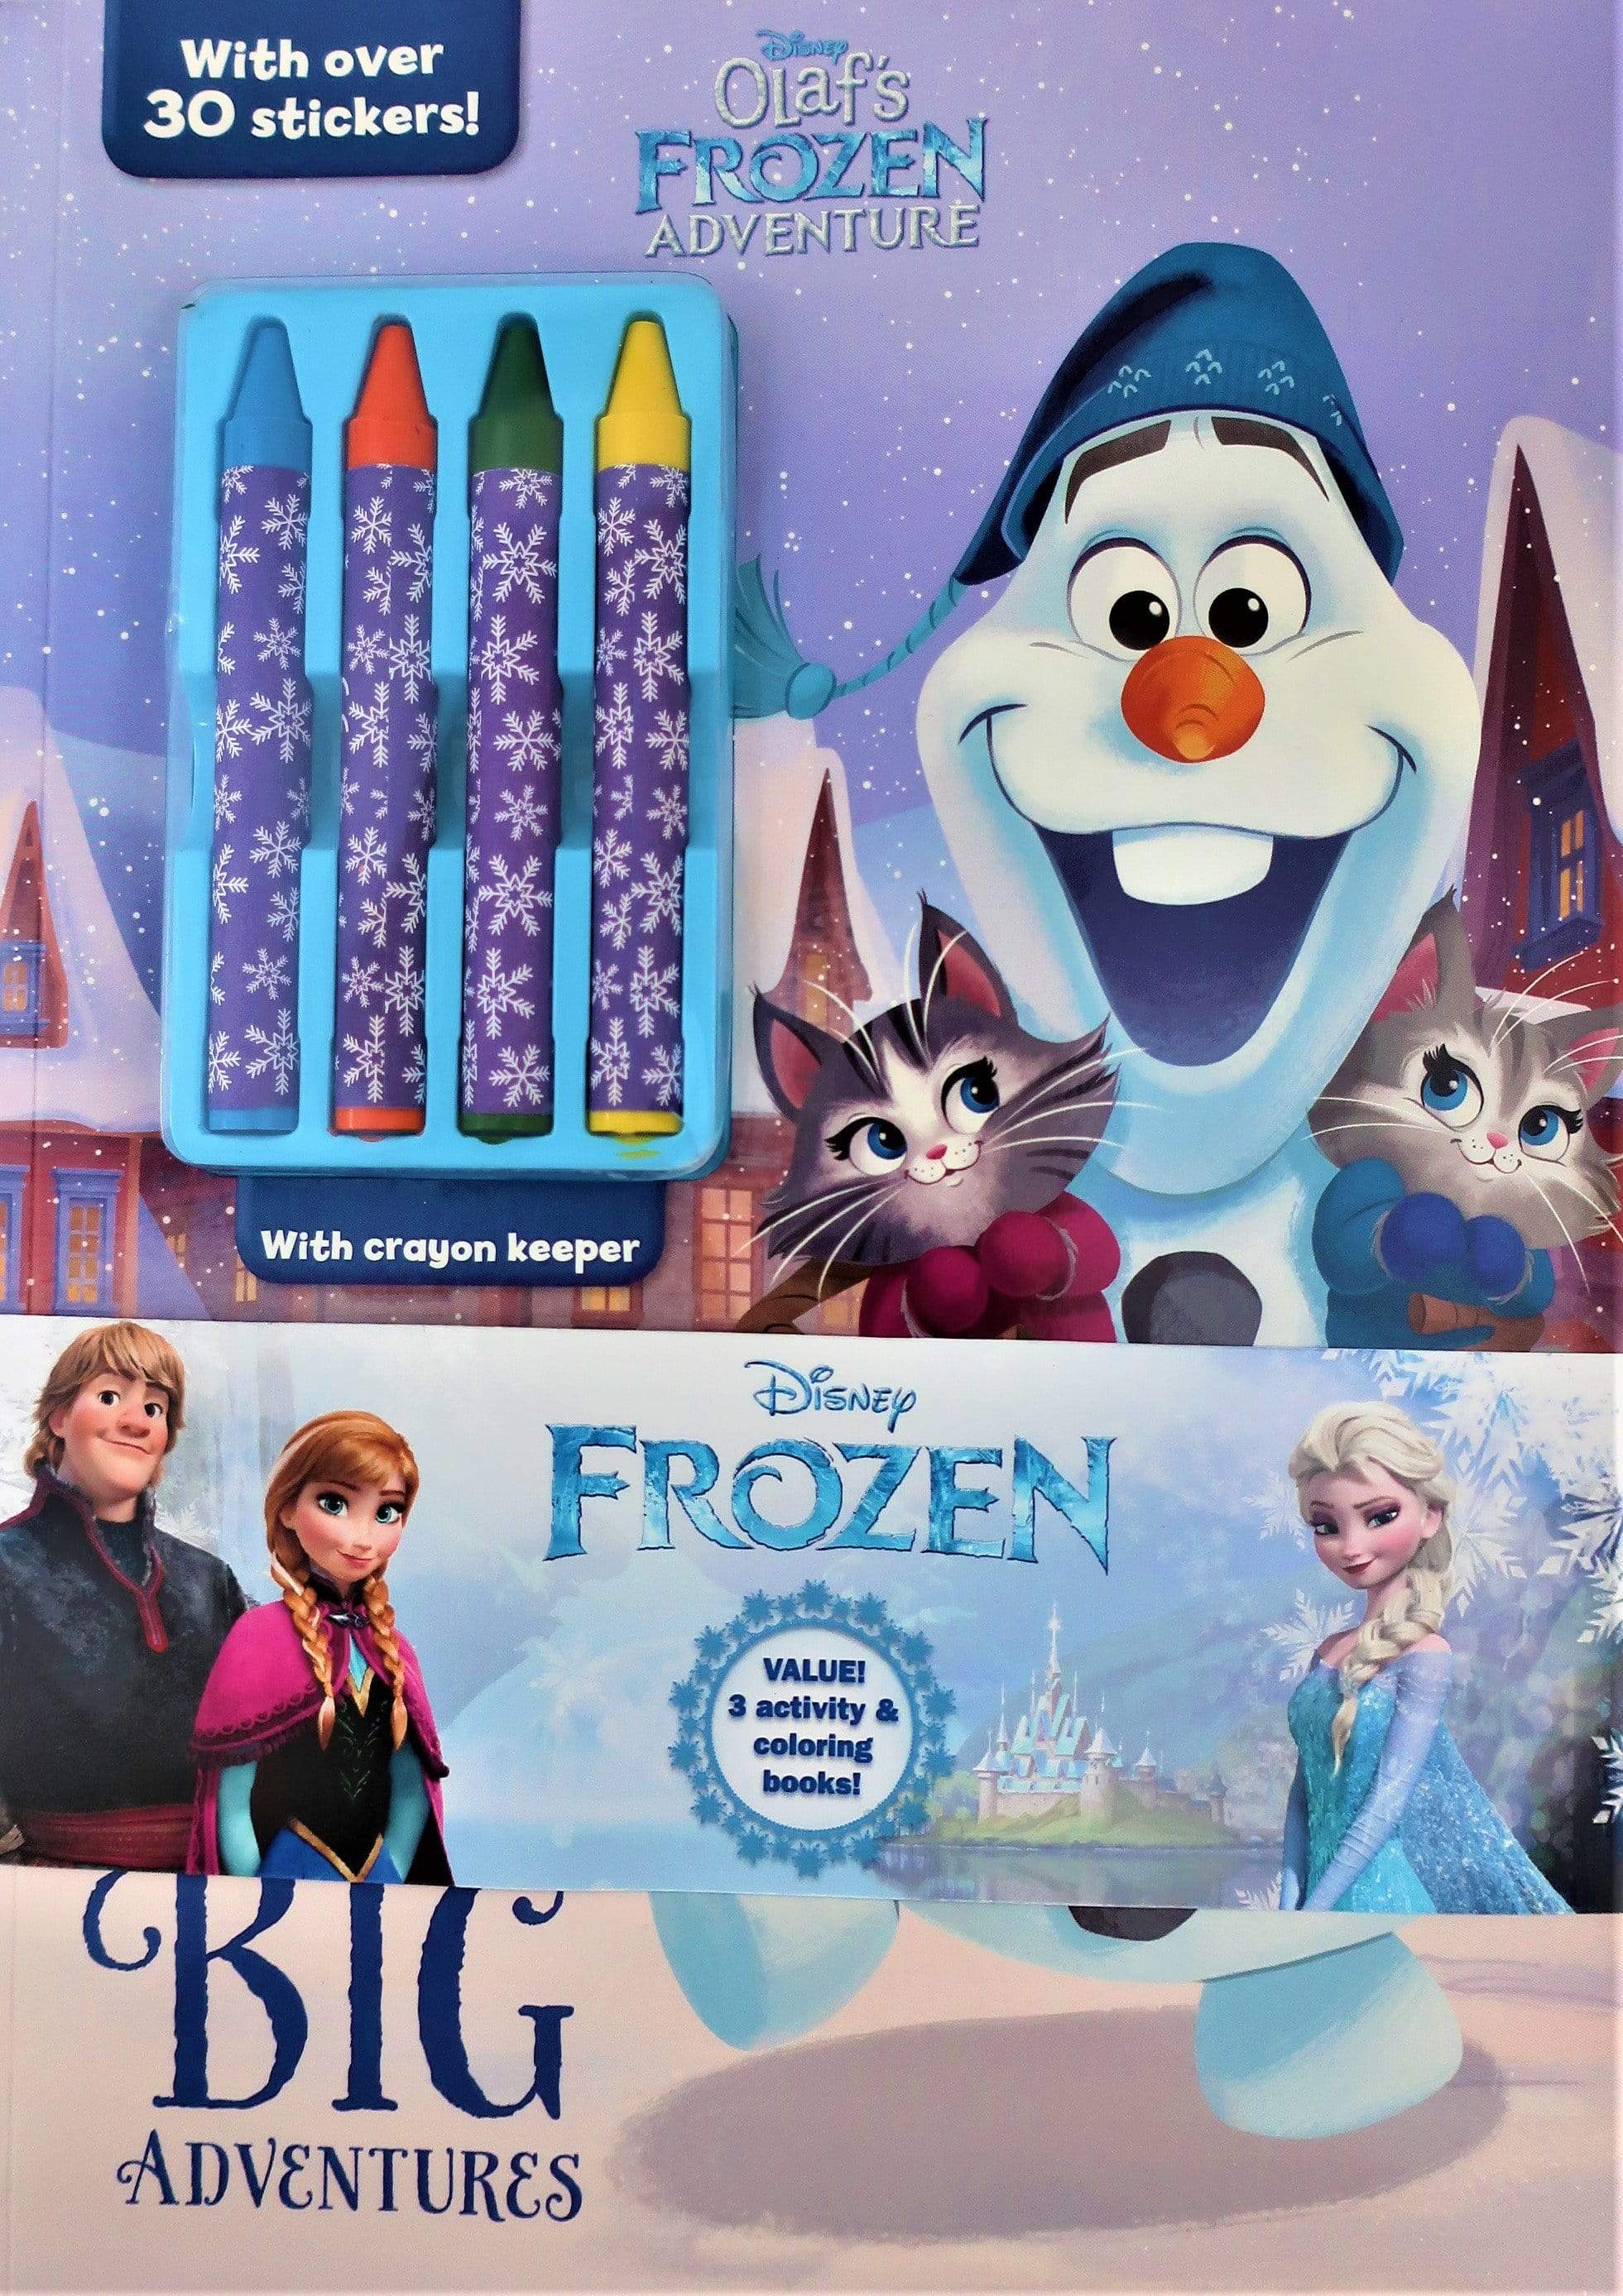 Disneys frozen activity book coloring book set